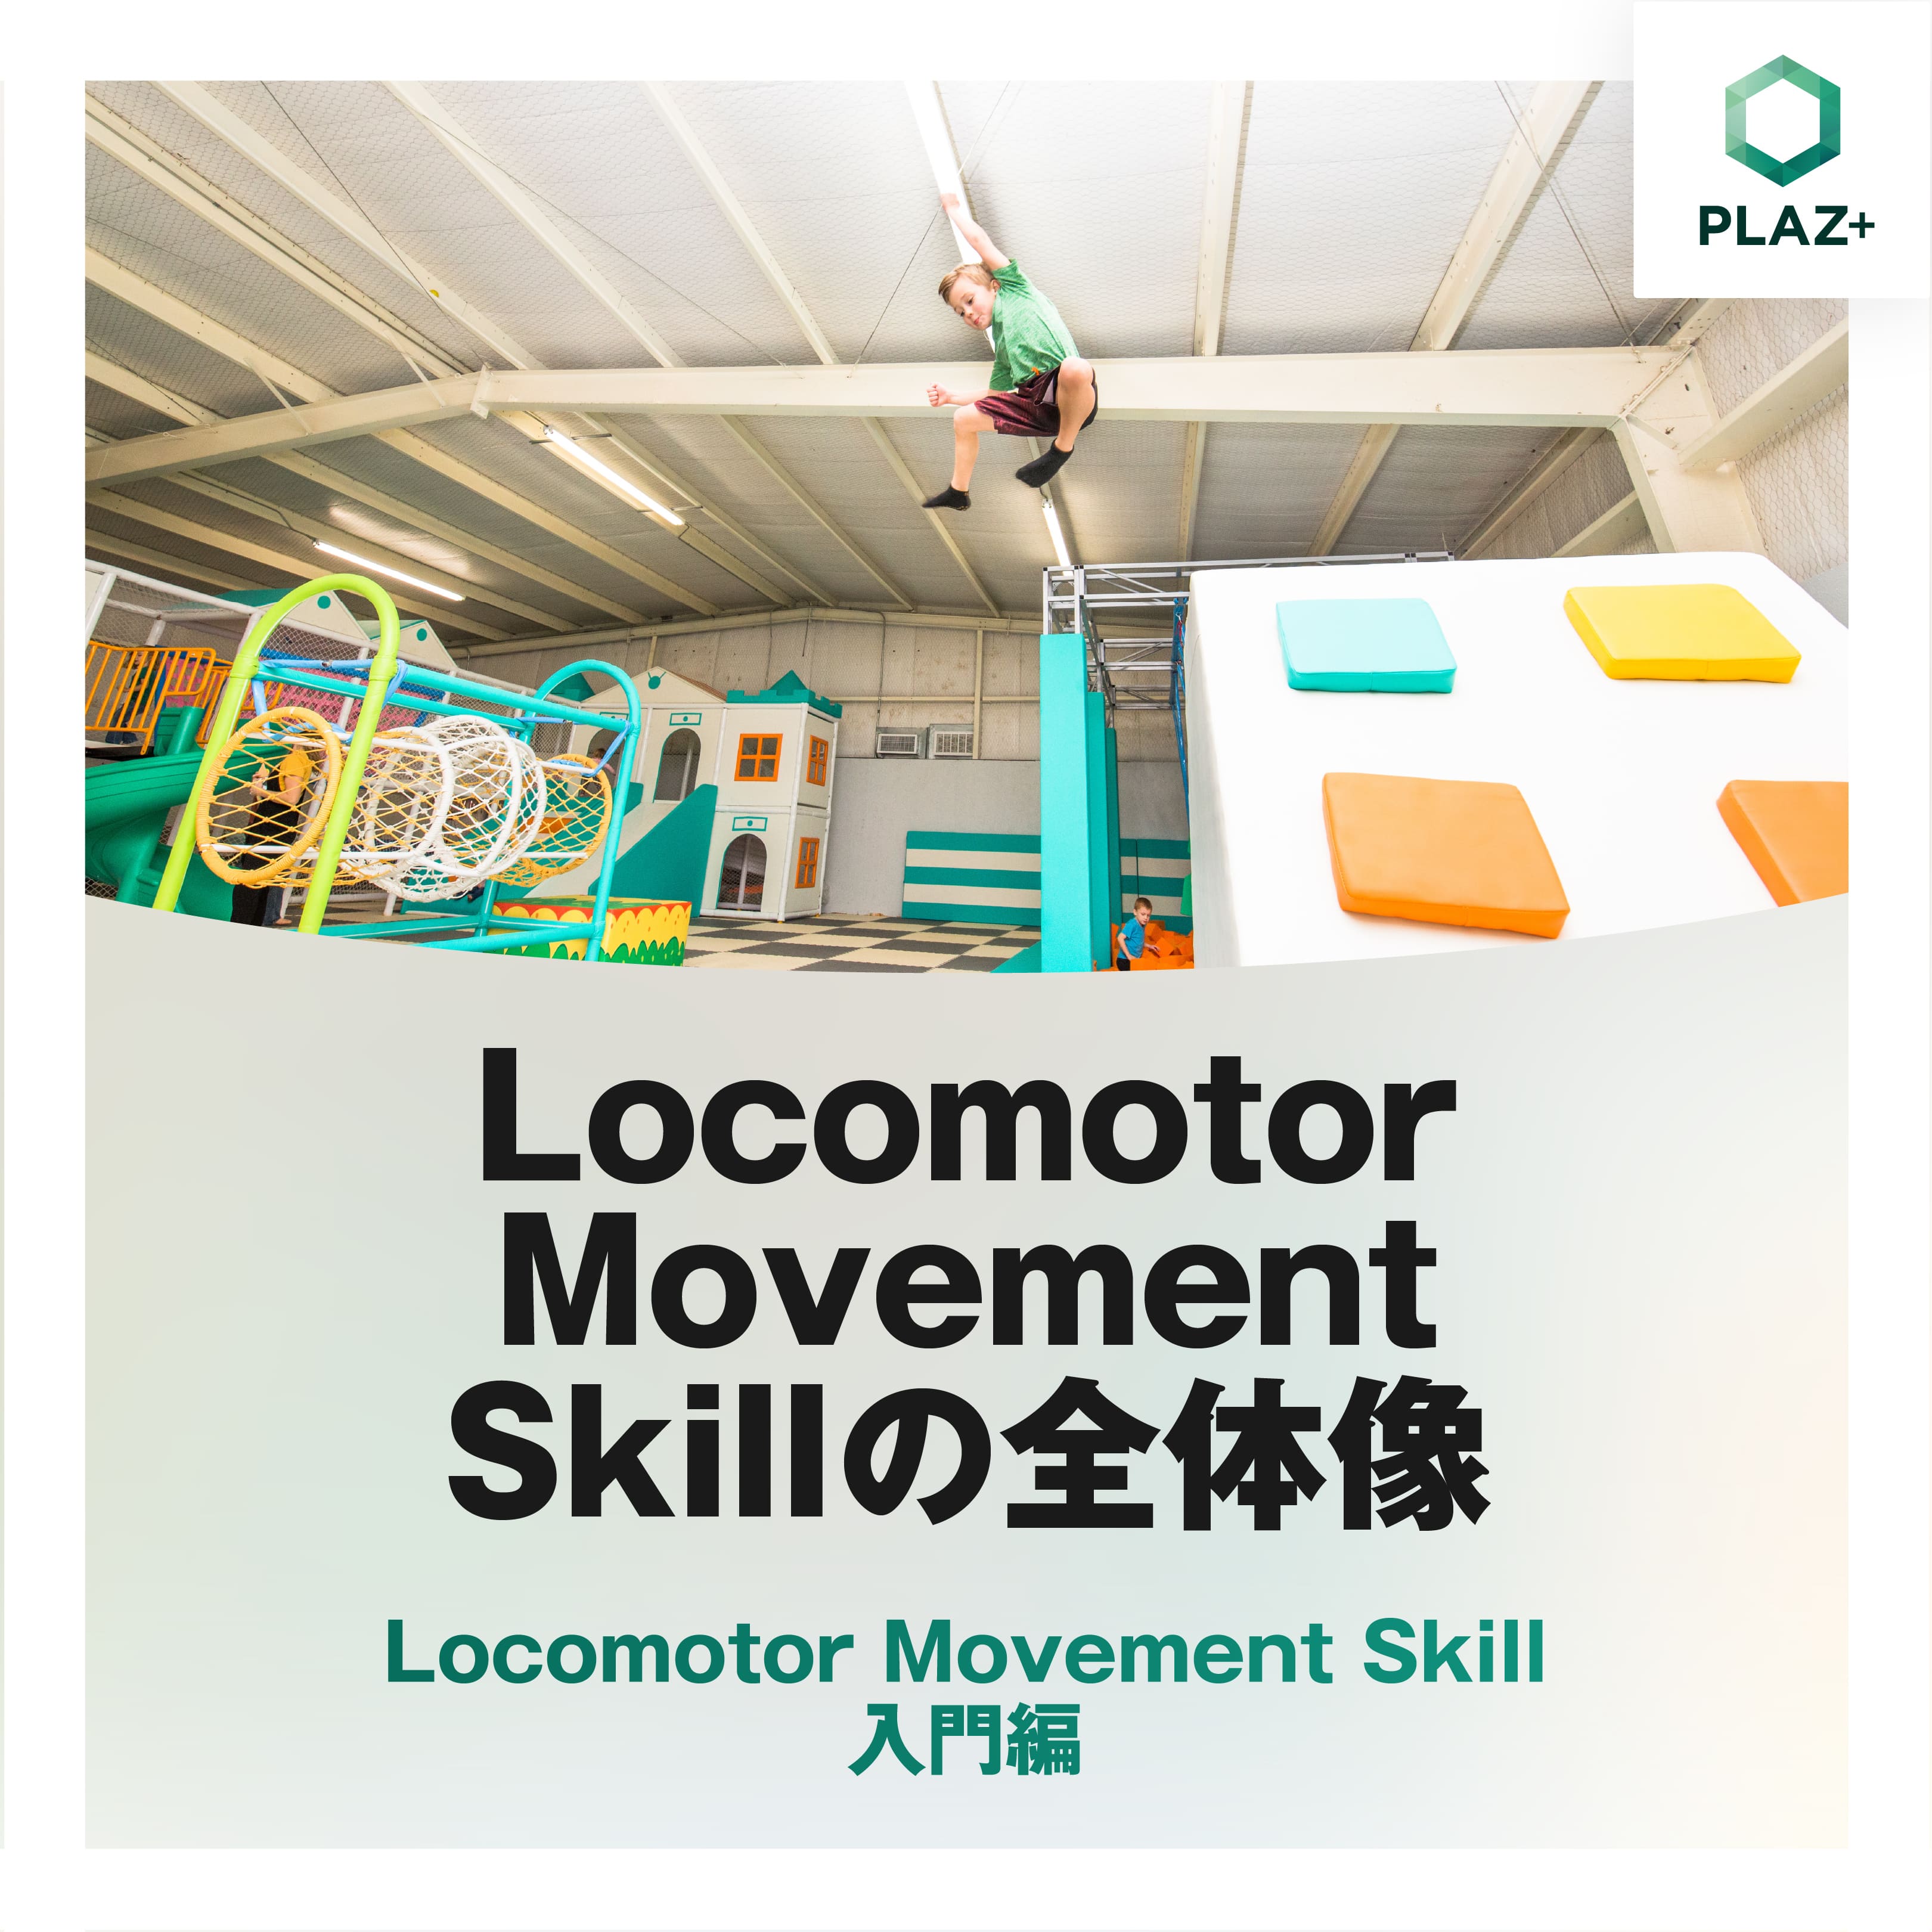 Locomotor Movement Skillの全体像